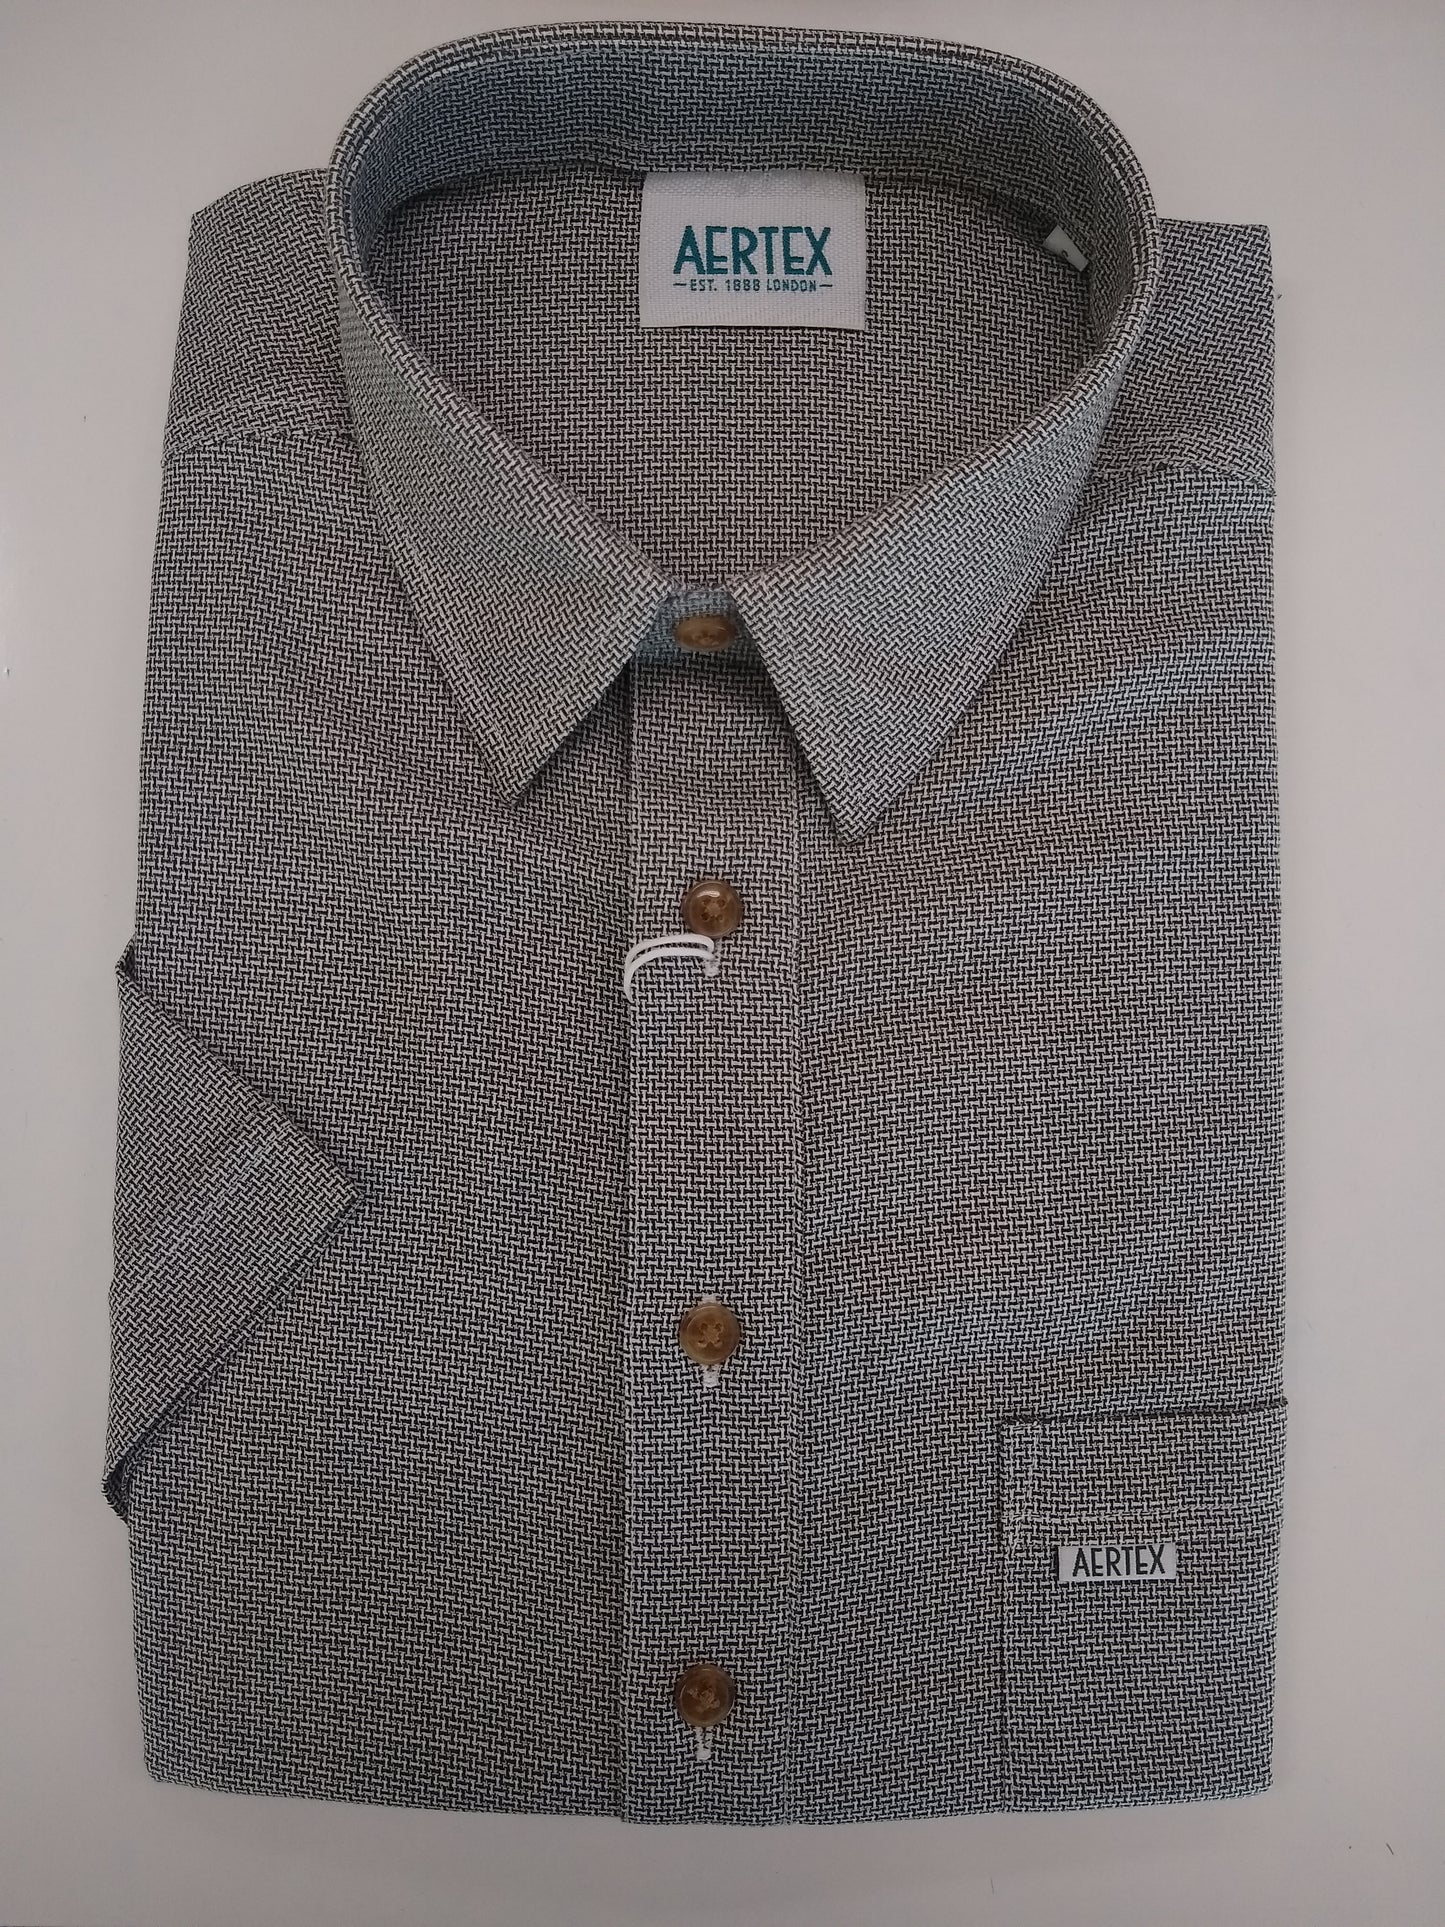 Aertex Taunton Polo Short Sleeve Shirt - FYO196